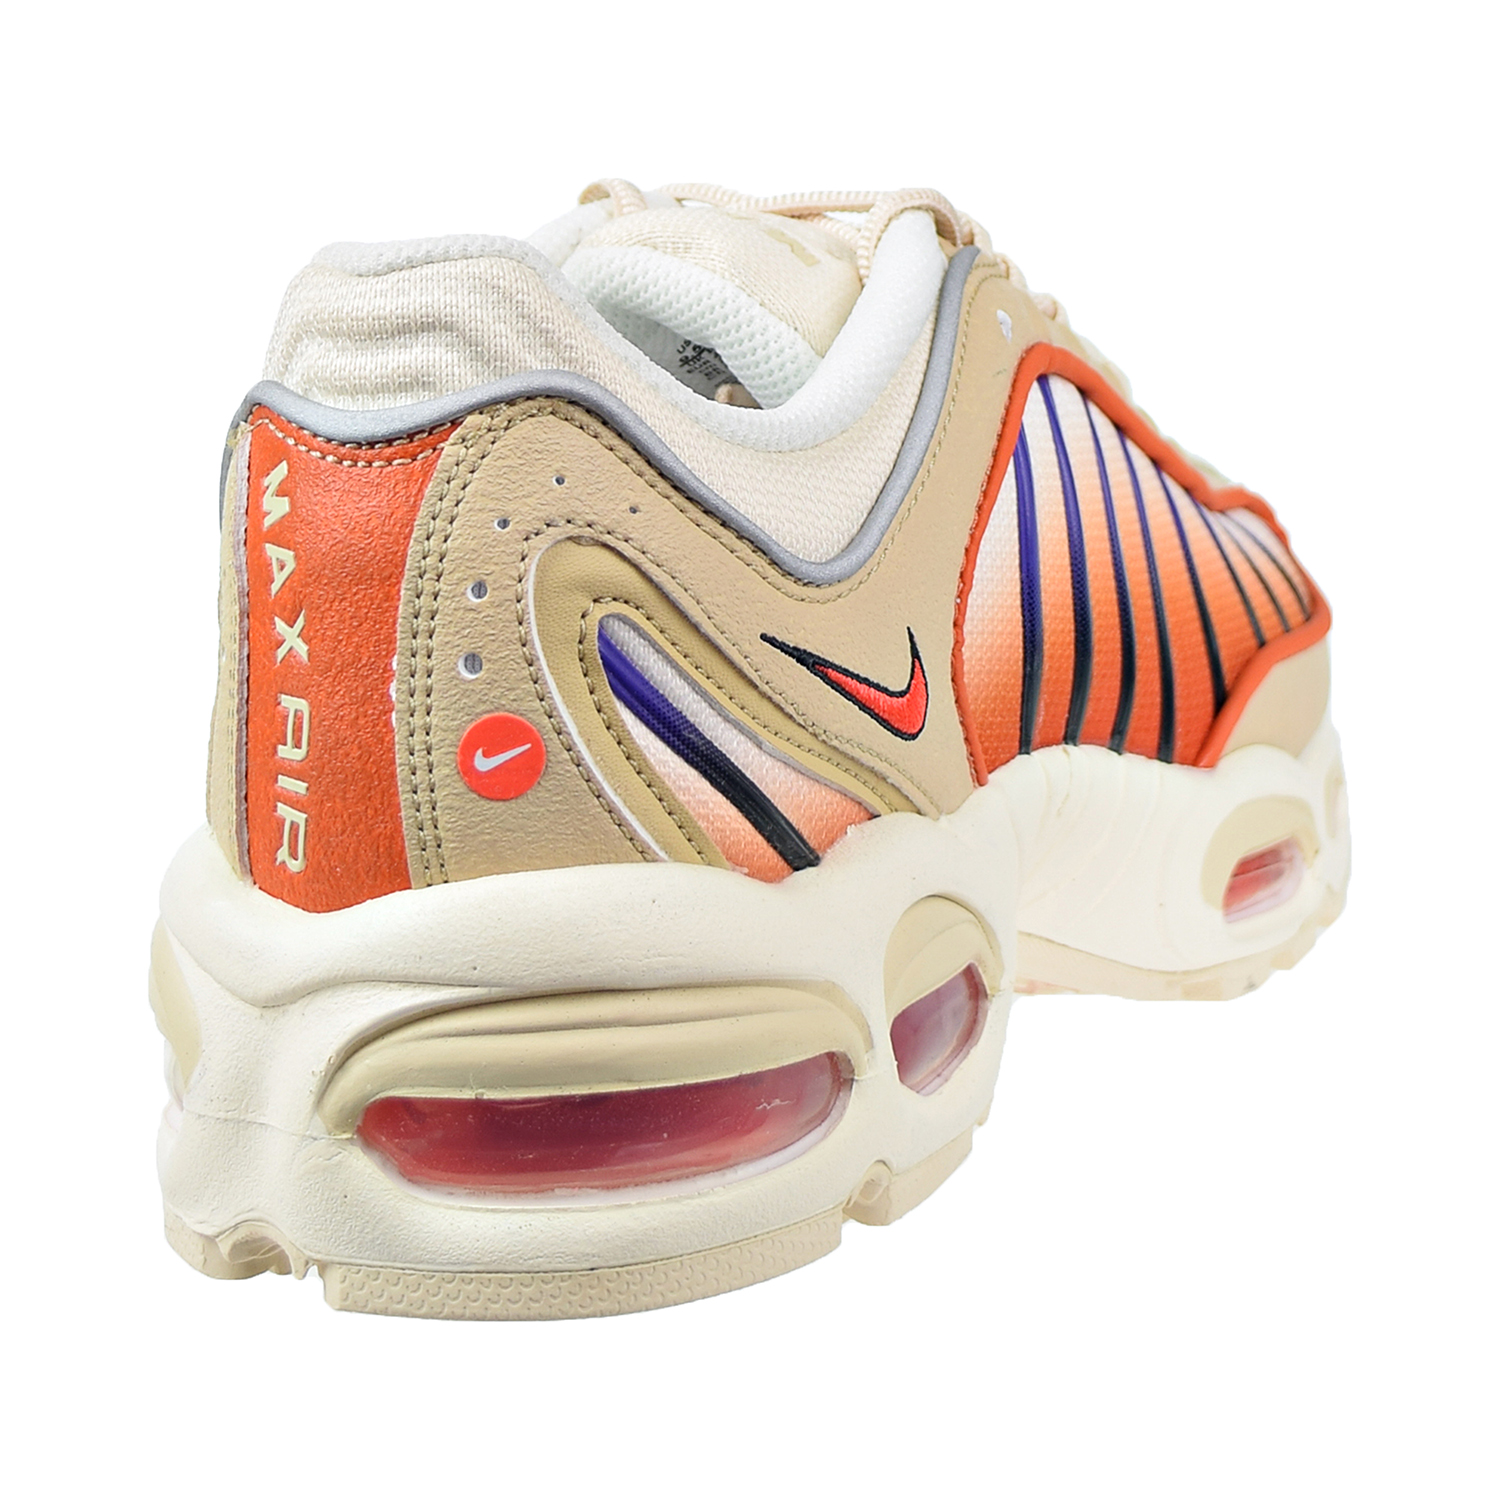 Nike Air Max Tailwind IV Men's Shoes Desert Ore/Team Orange  aq2567-200 - image 3 of 6